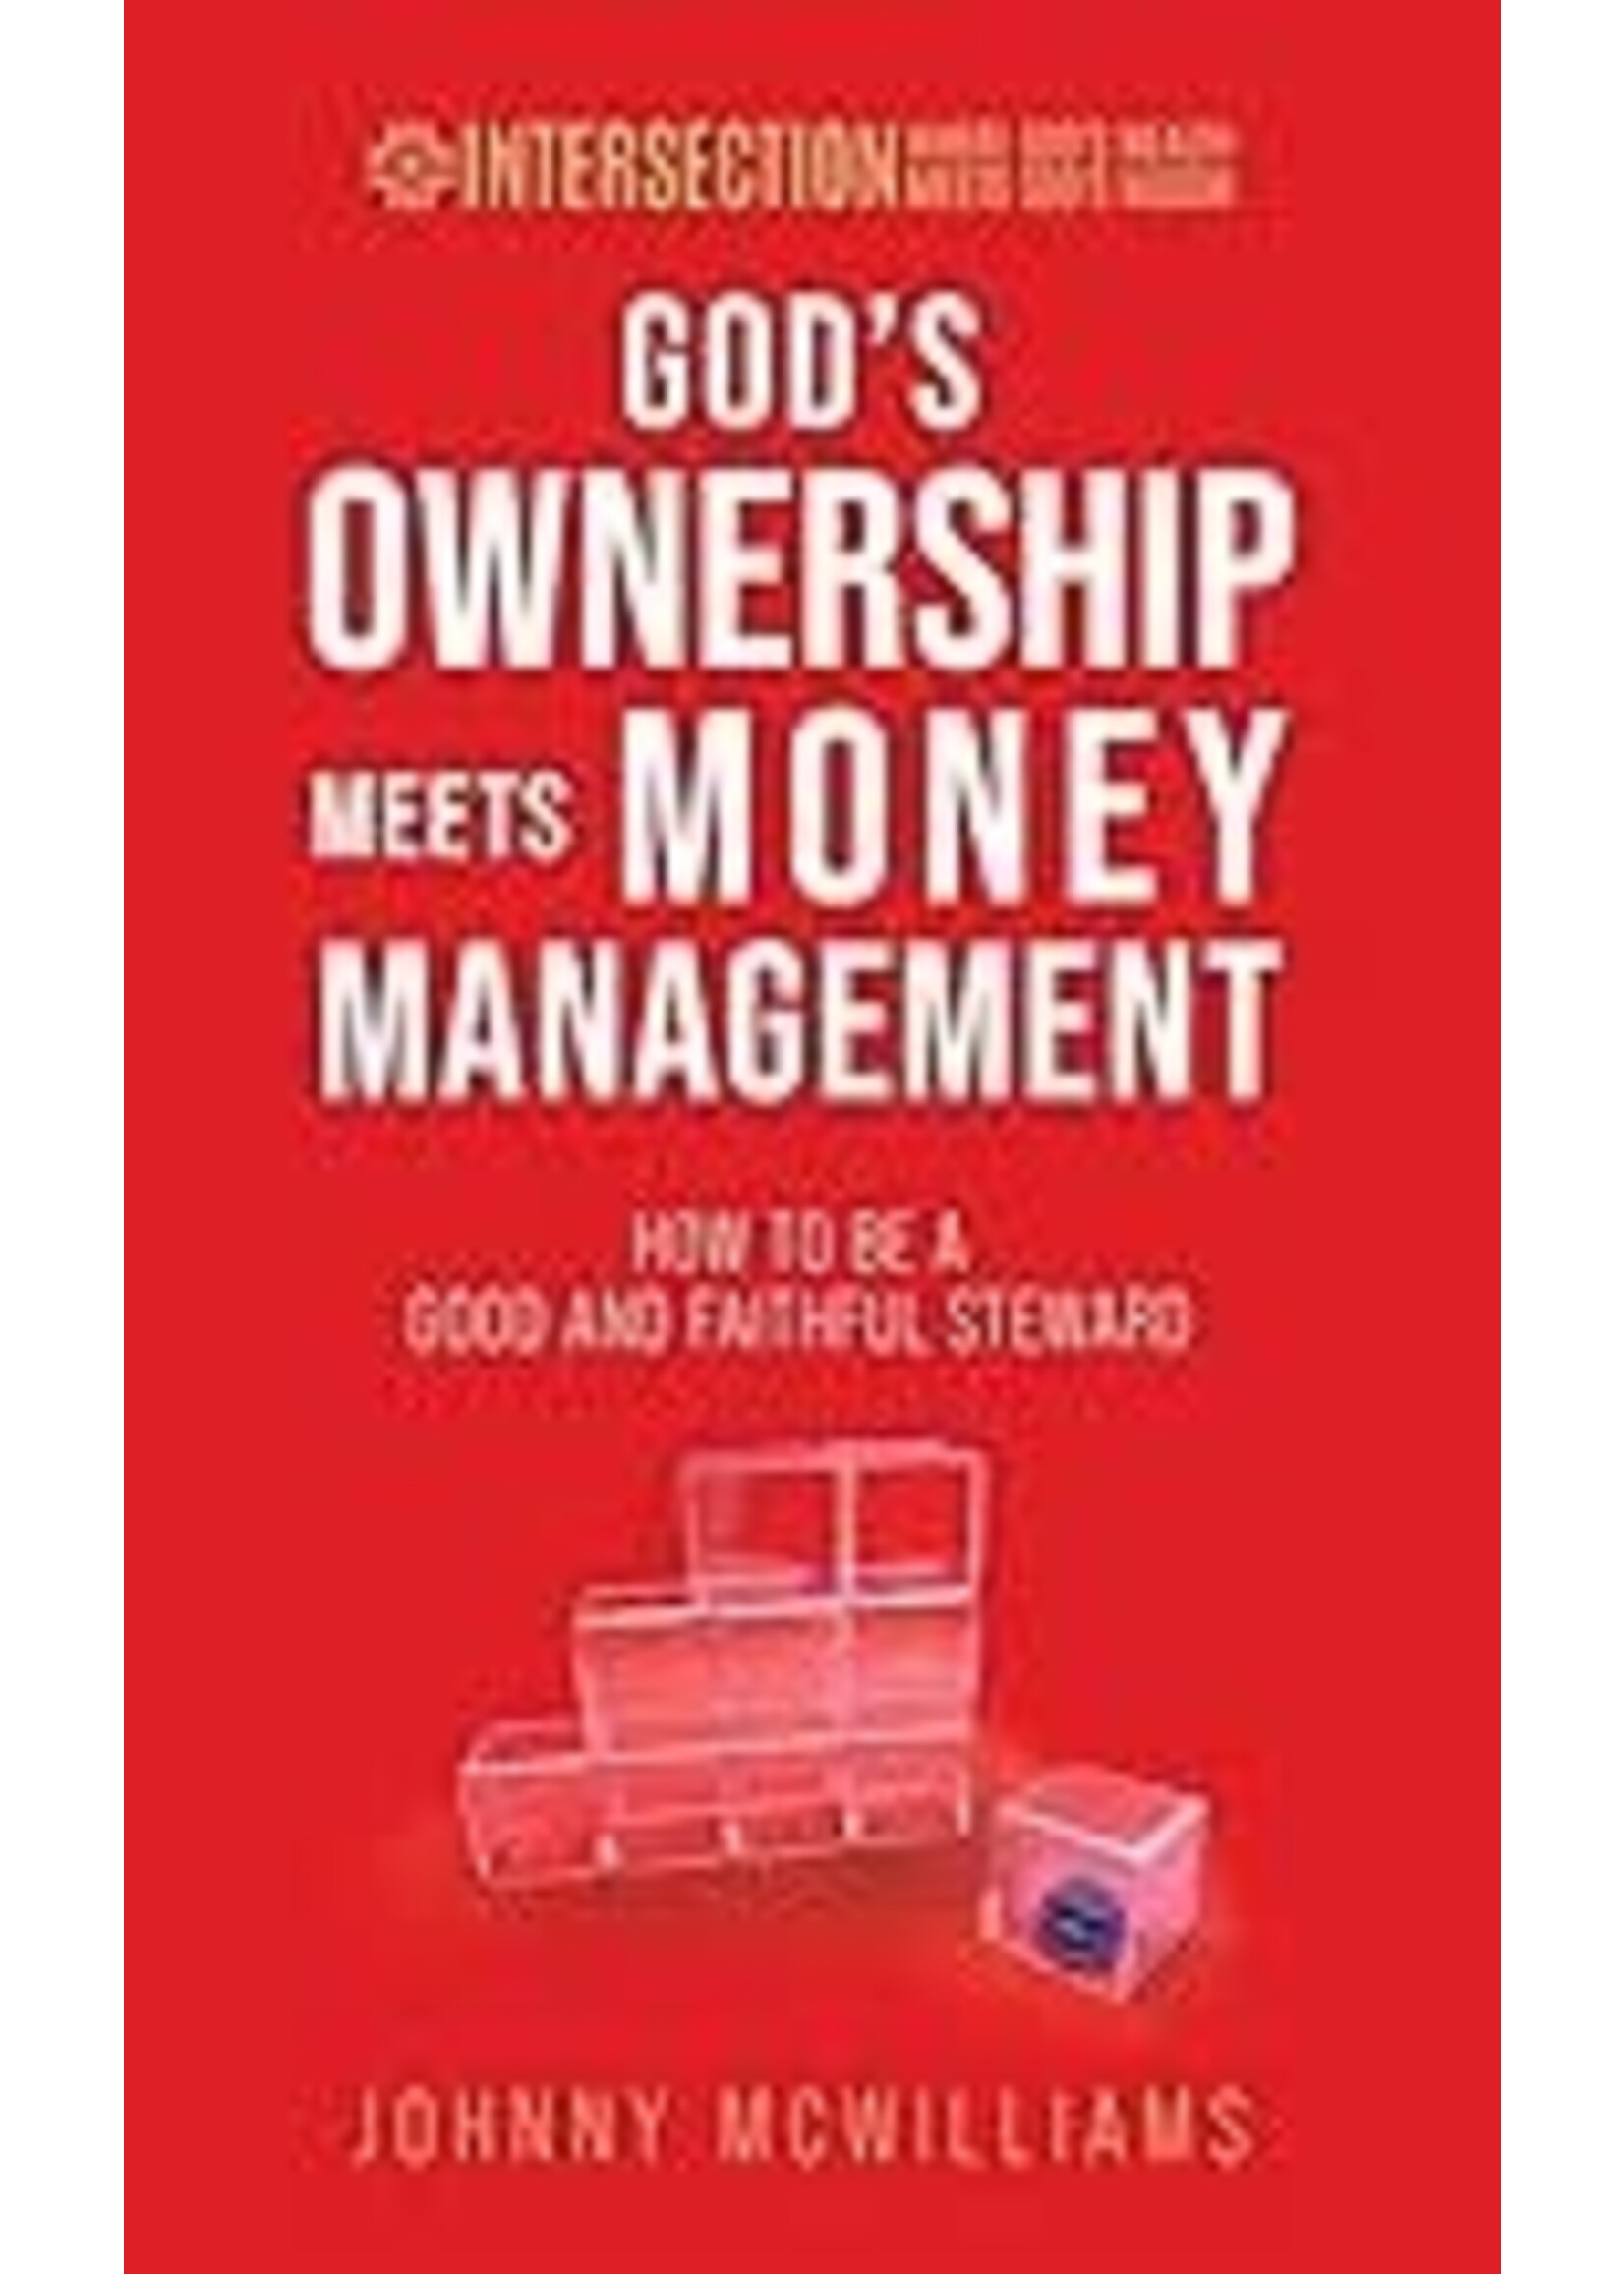 God's Ownership Meets Money Management